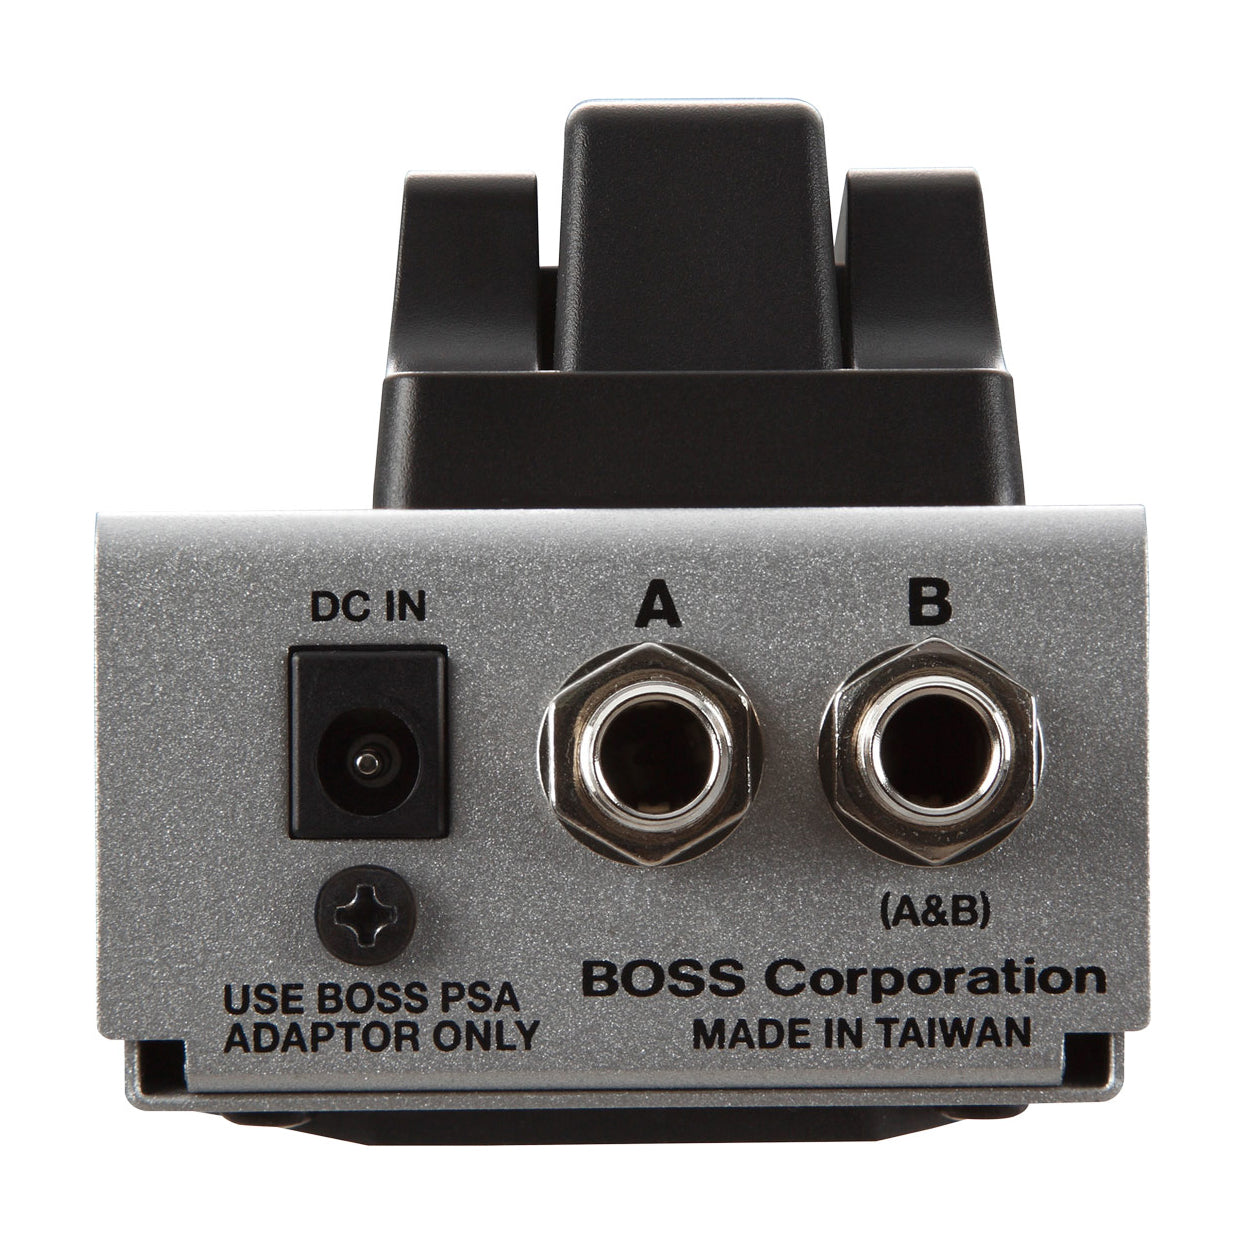 Boss FS7 Dual Foot Switch